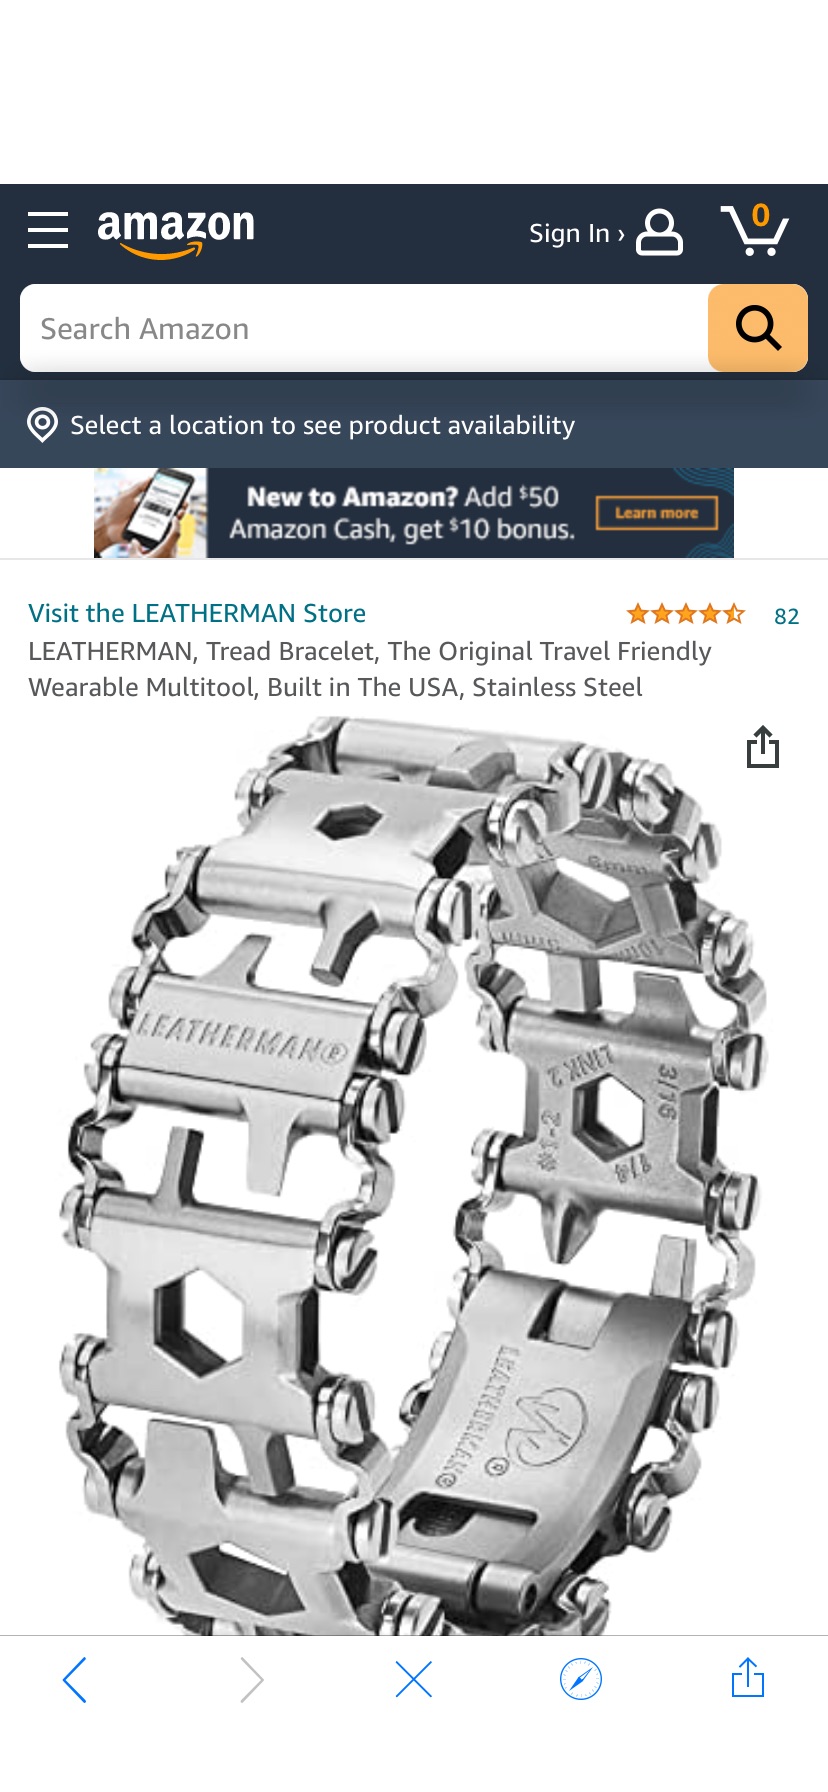 Amazon.com: LEATHERMAN, Tread Bracelet, The Original Travel Friendly Wearable Multitool, Built in The USA, Stainless Steel : Tools & Home Improvement 以前就想买，但是价格太贵了，这次价格好像是史低了，可以入手